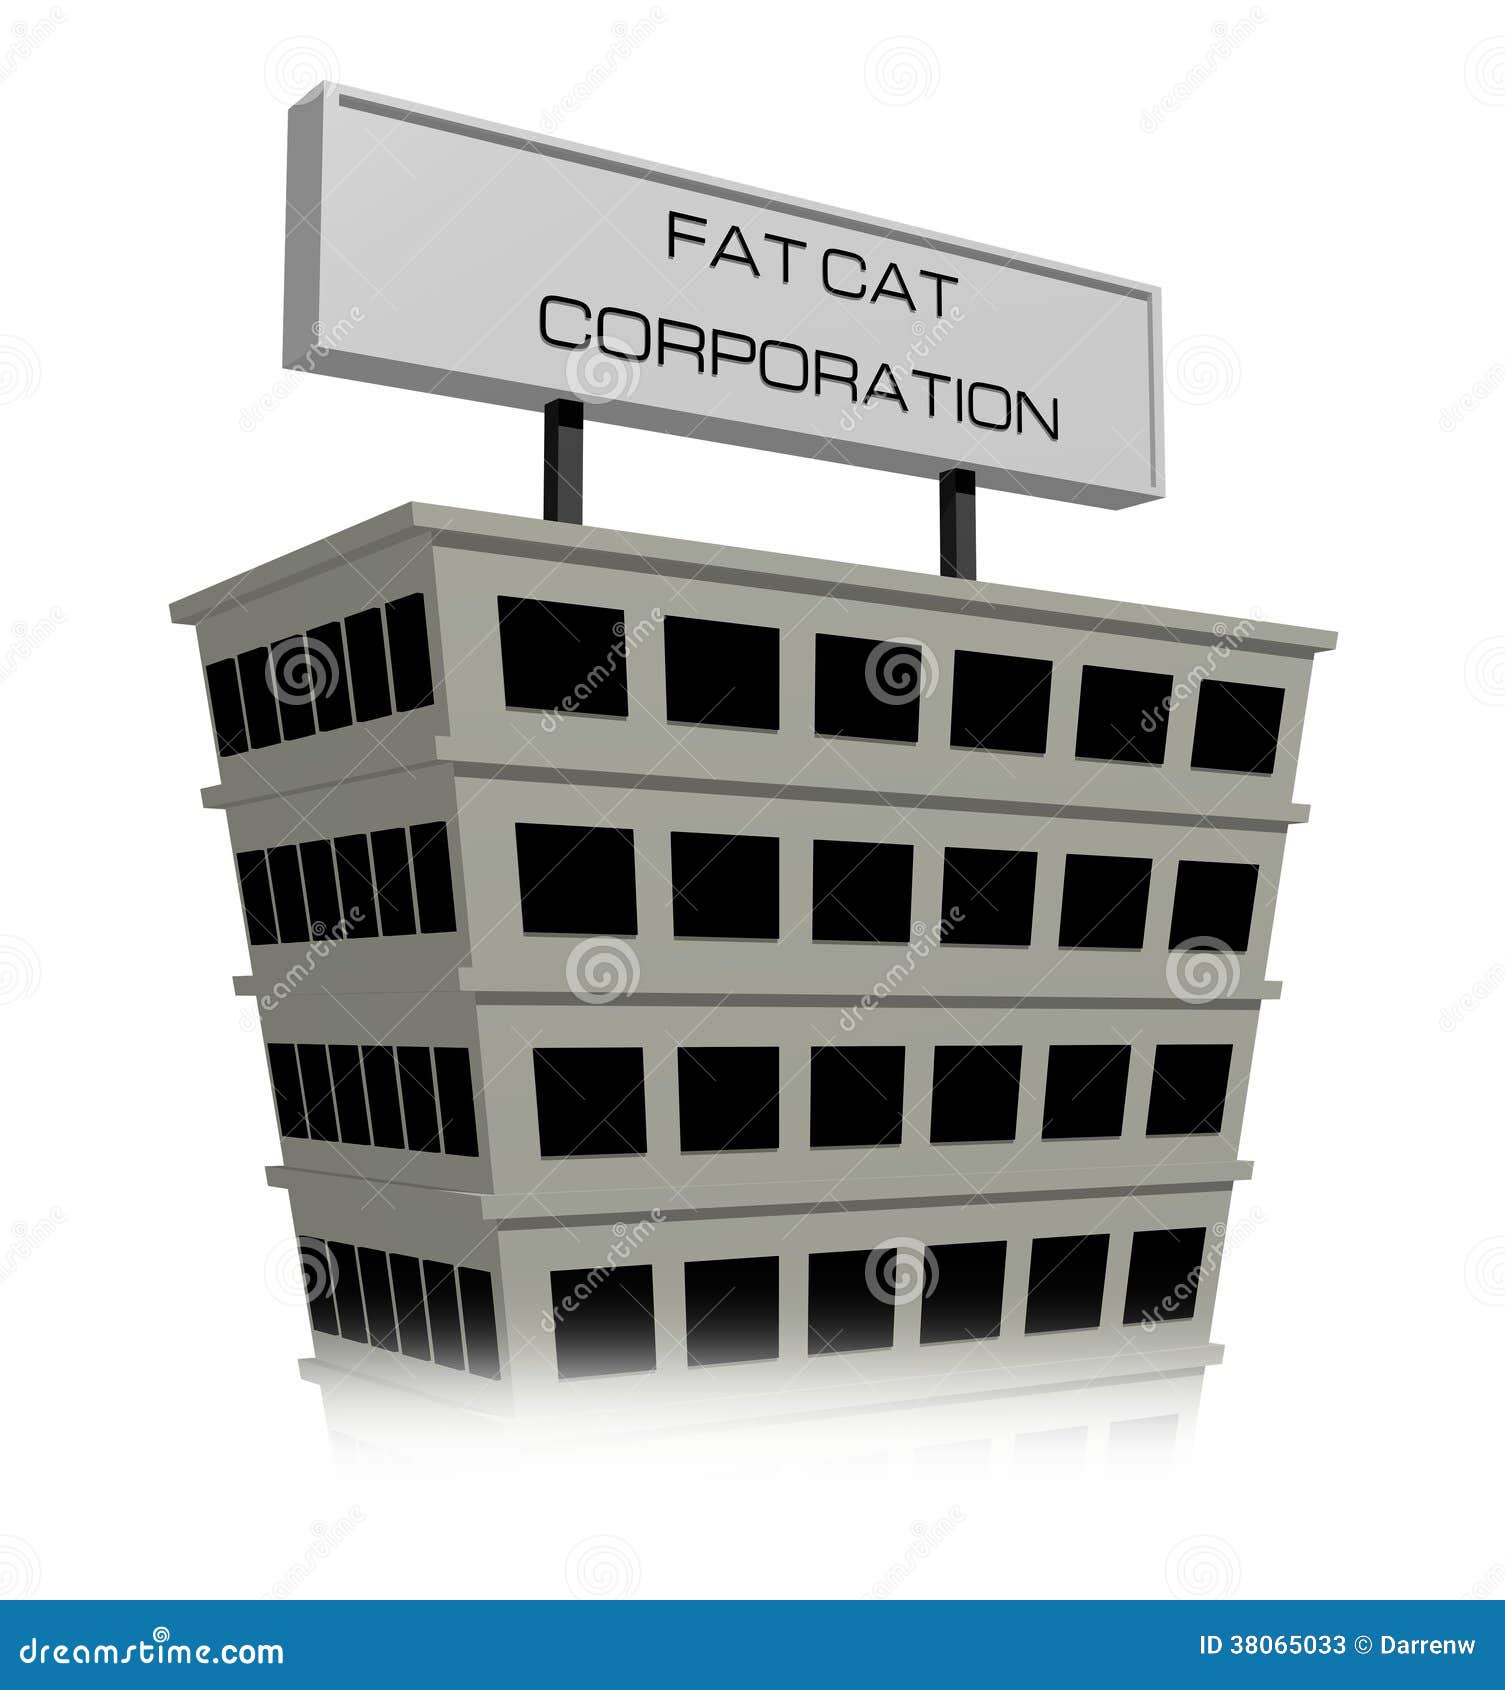 fat cat corporation